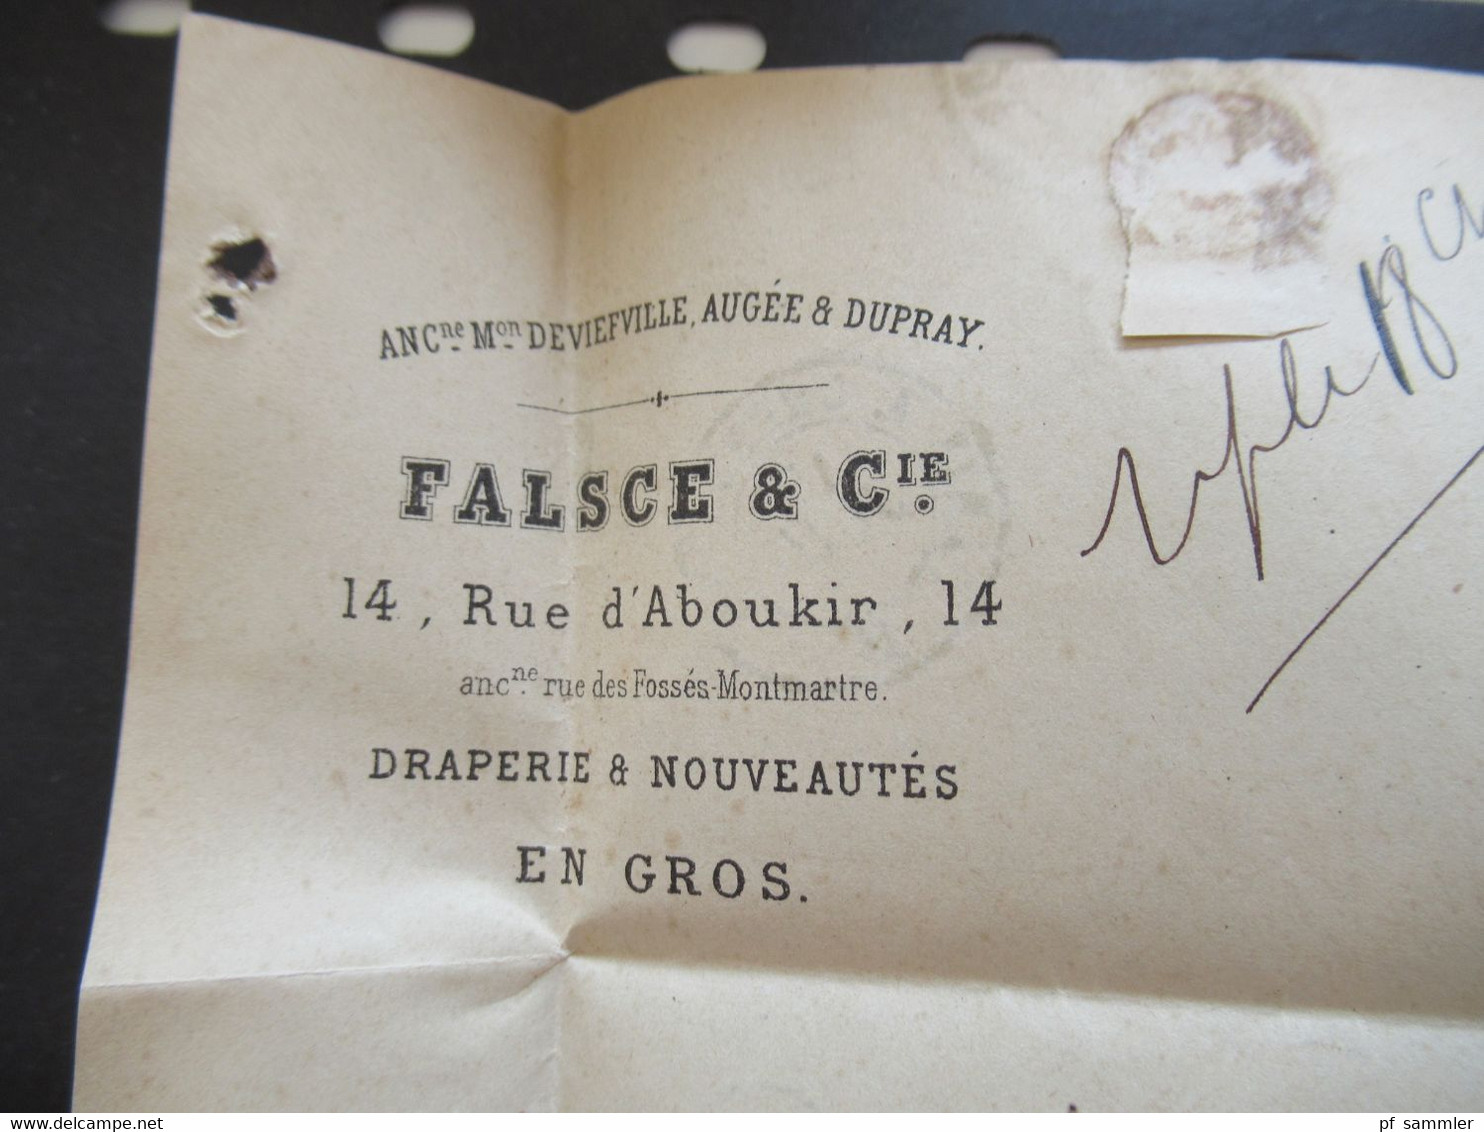 Frankreich 17.7.1868 Napoleon III. Nr.28 mit Sternstempel Paris - Elbeuf Falsce & Cie Rue d'Aboubir 14 Draperie & Nouvea